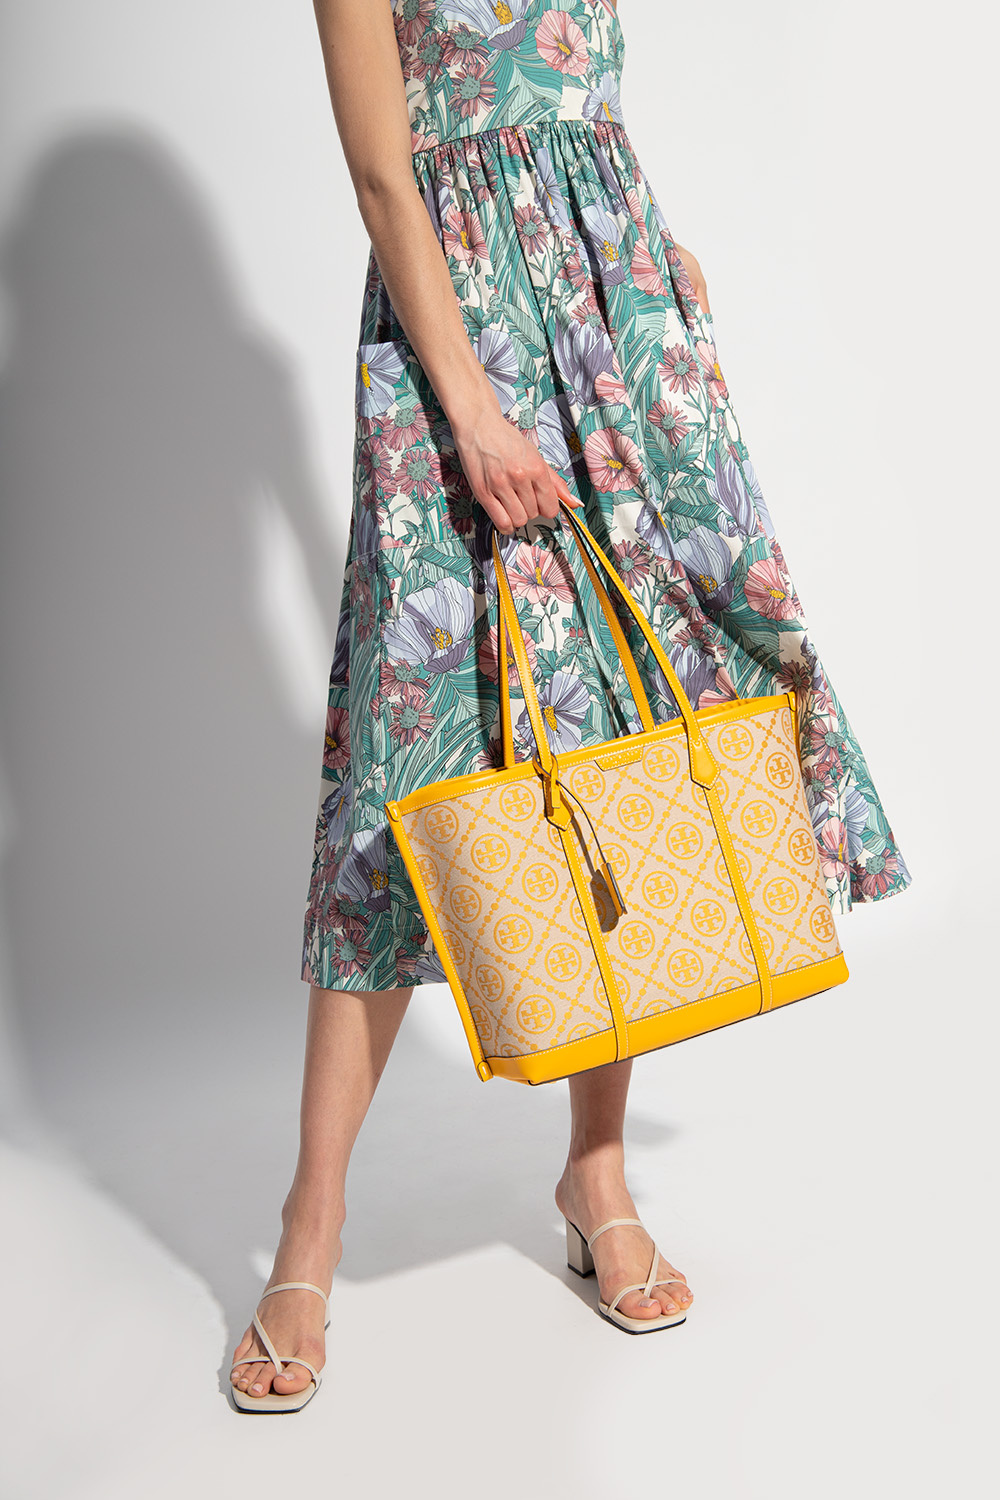 Tory Burch Perry Monogram' Shopper Bag Women's Yellow | Vitkac